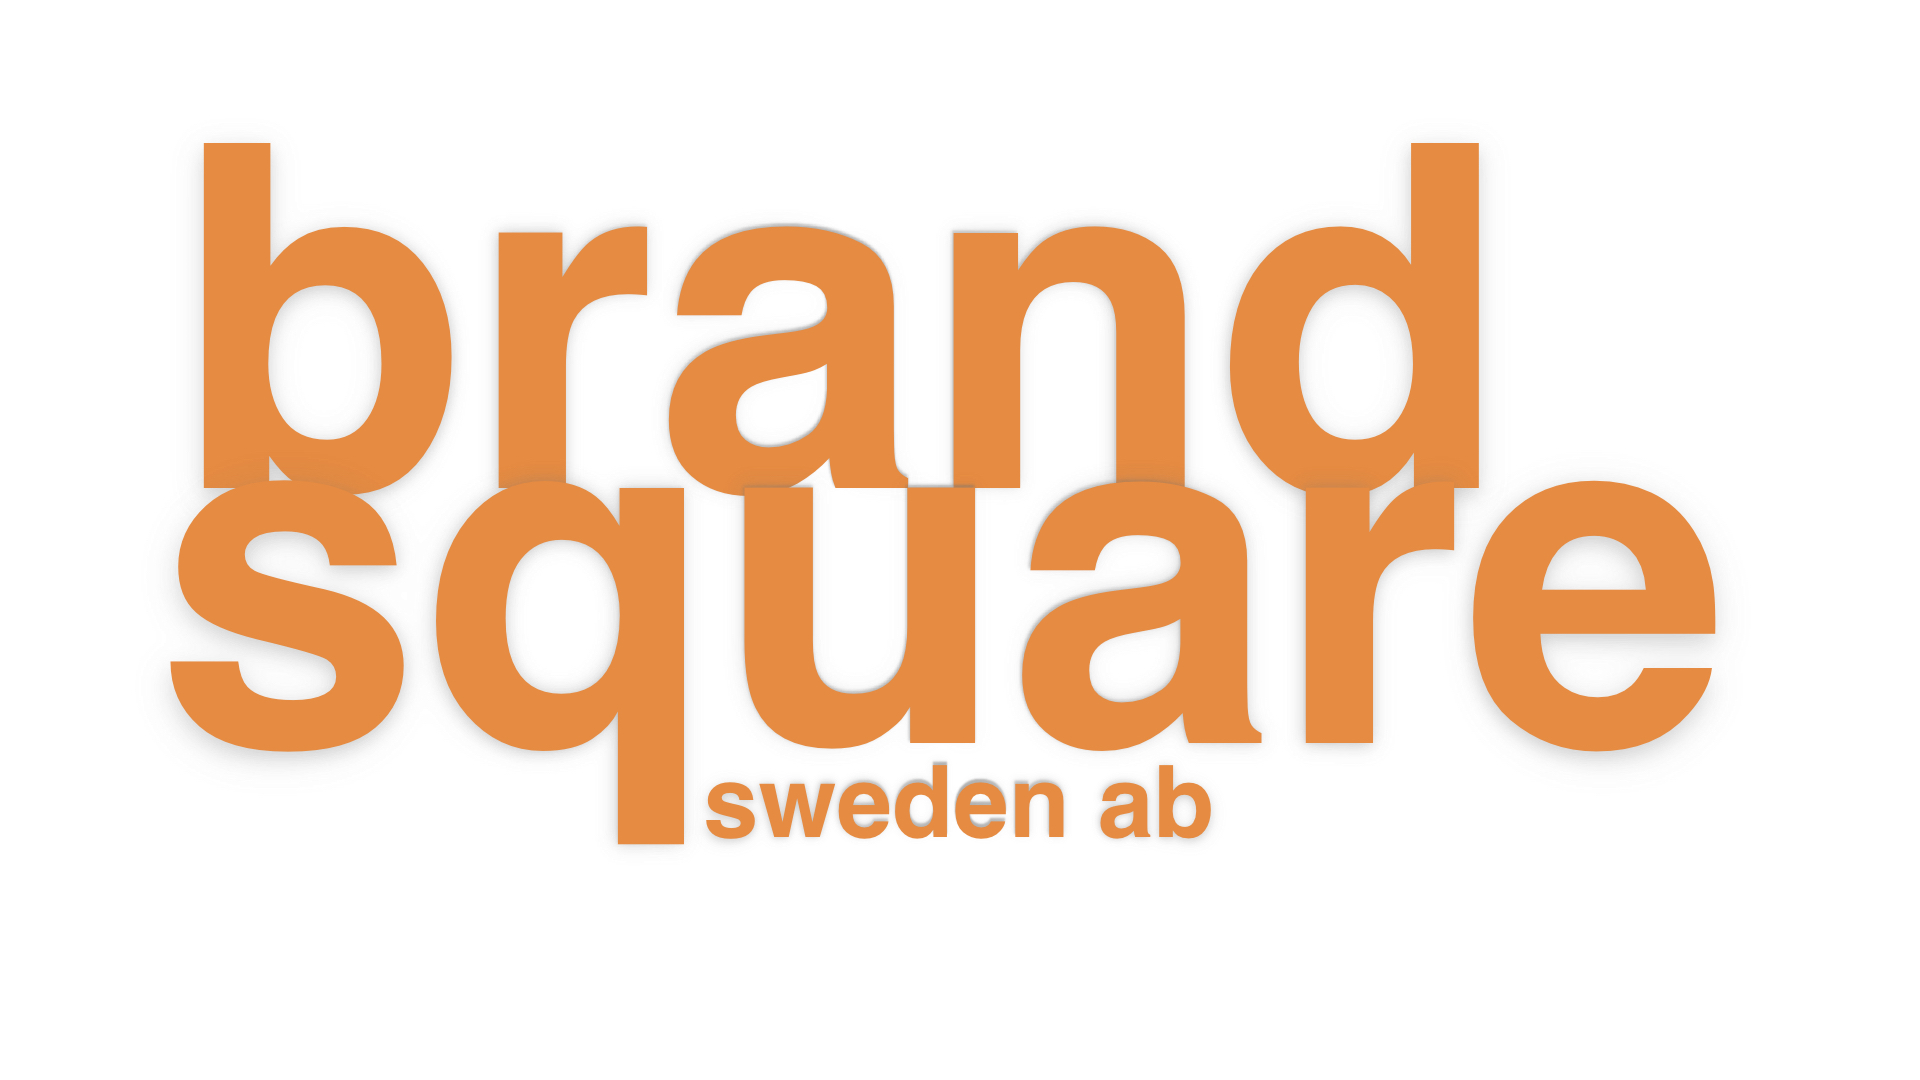 Brand Square Sweden AB